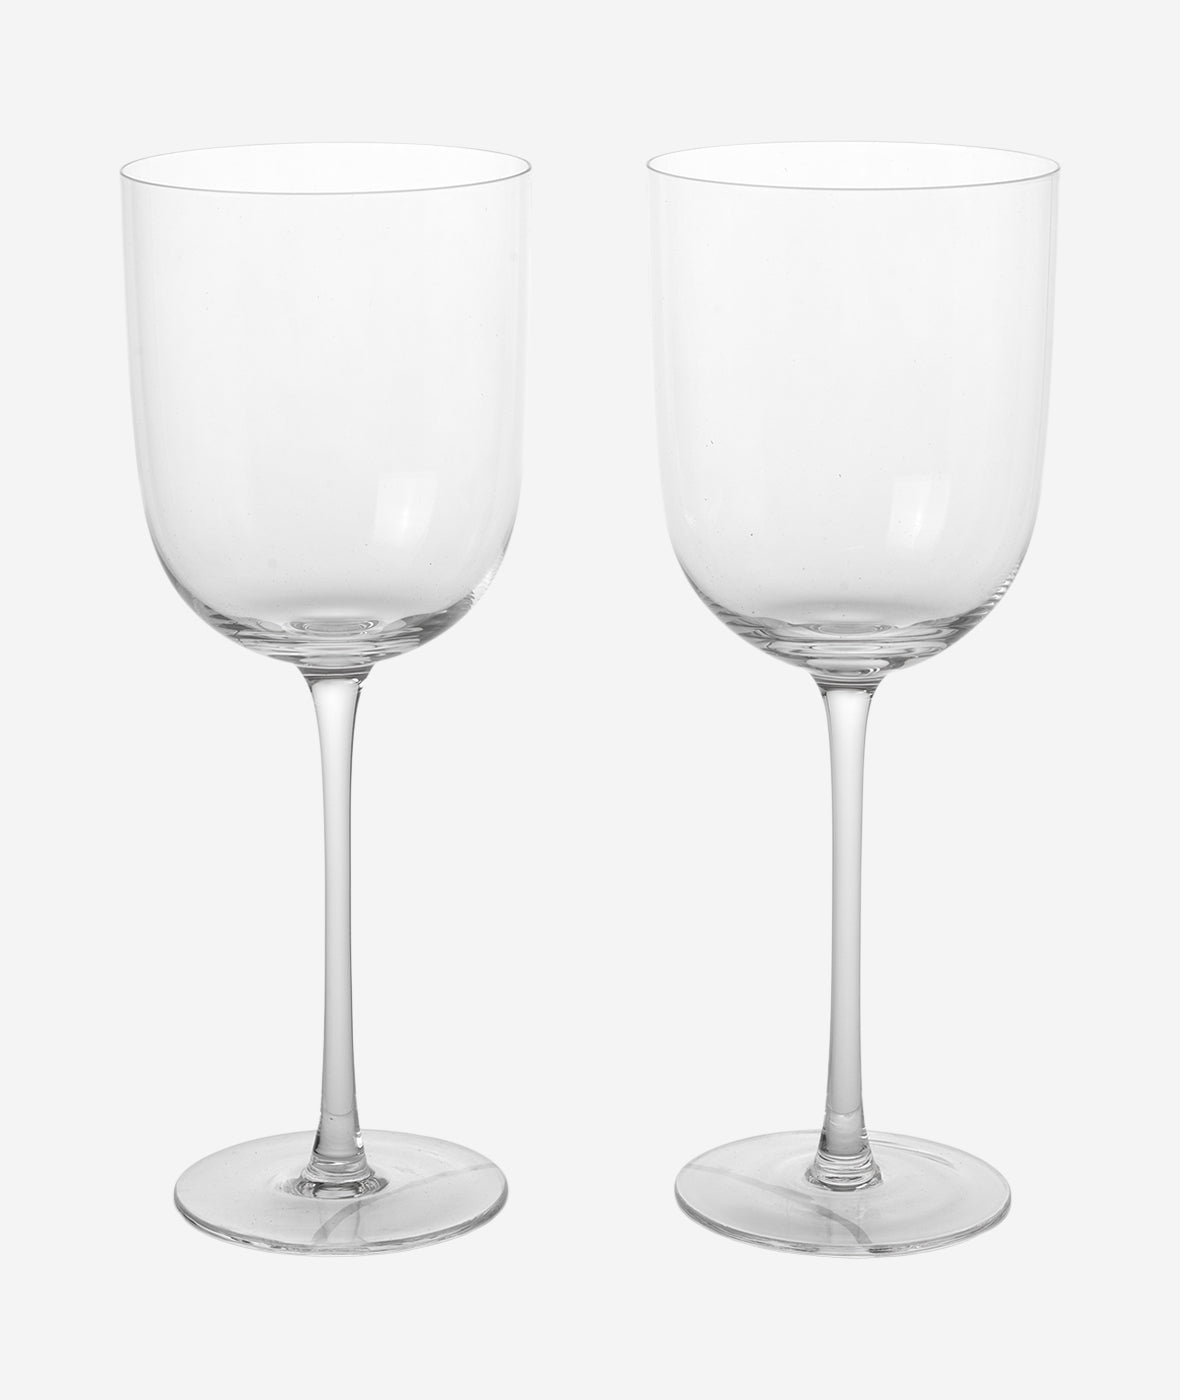 Host Wine Glass Set/2 - More Options